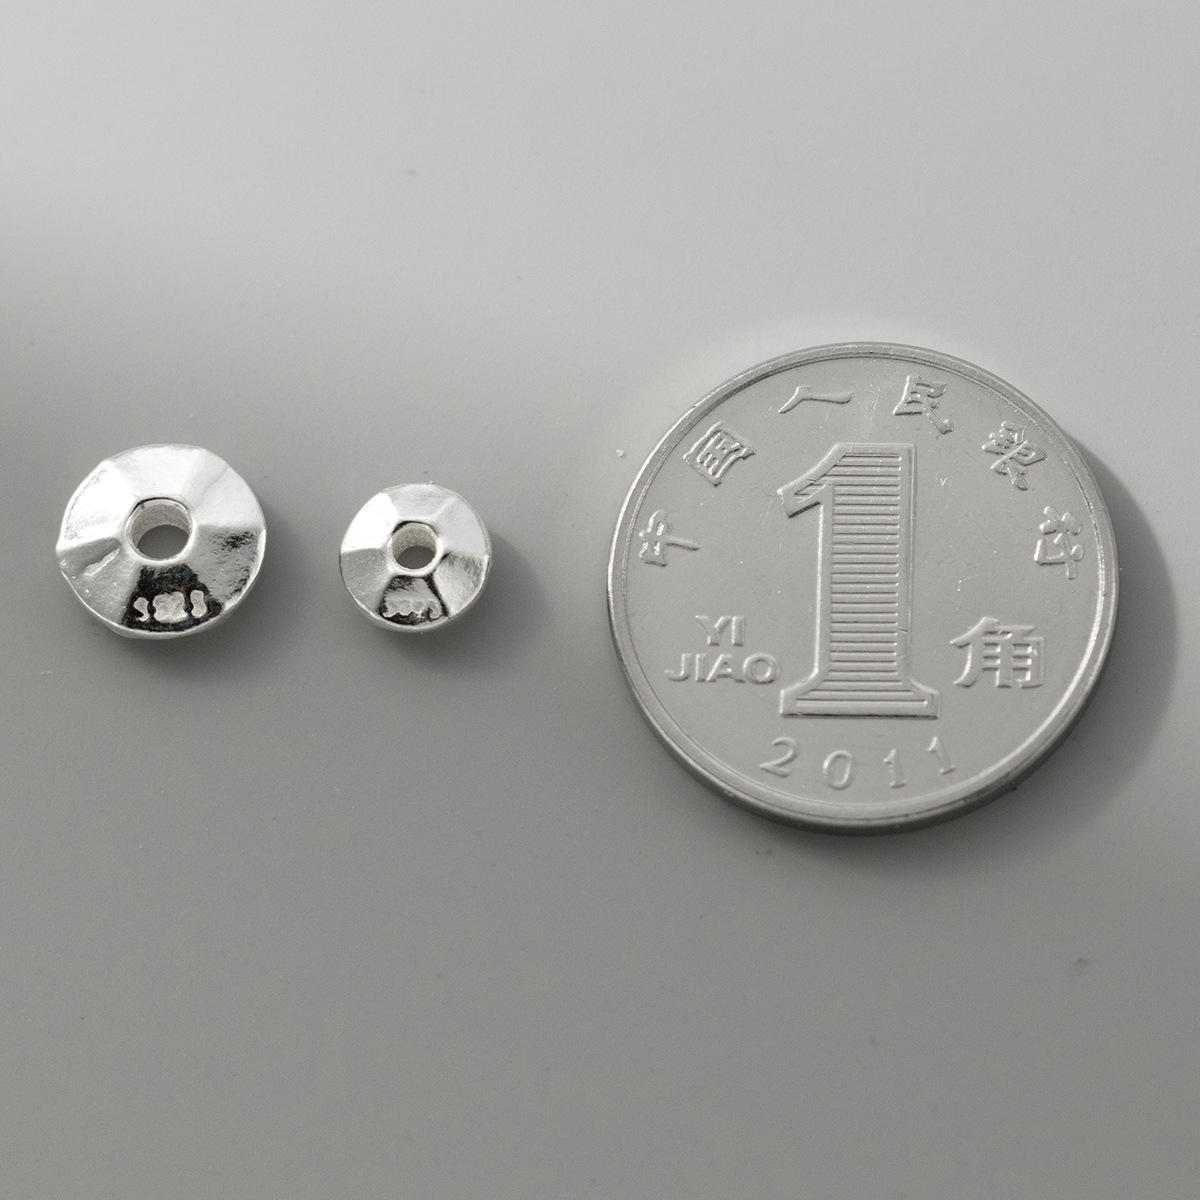 1:SilberSilbermünzen